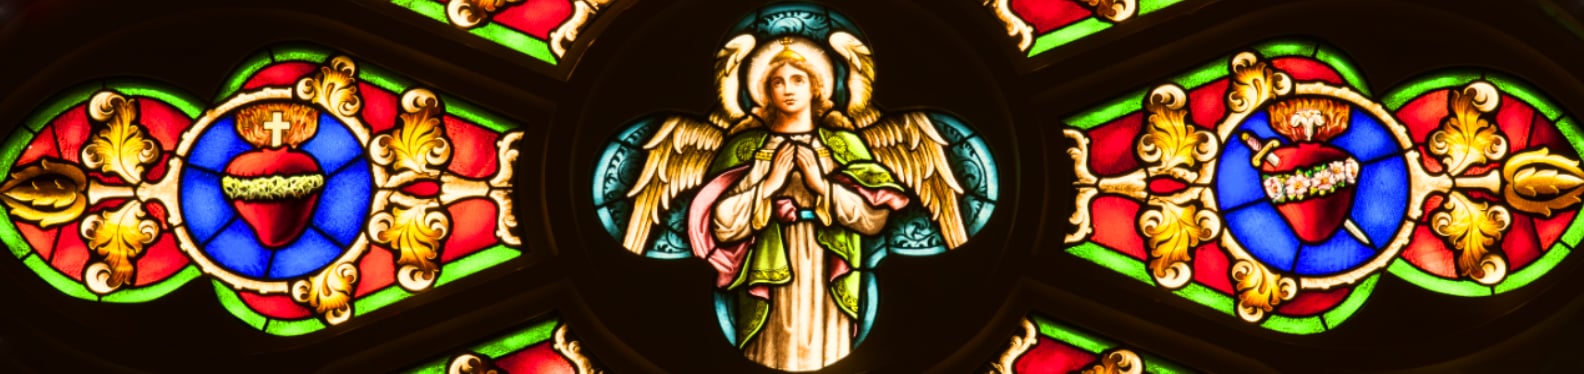 Rose Window featuring St. Michael